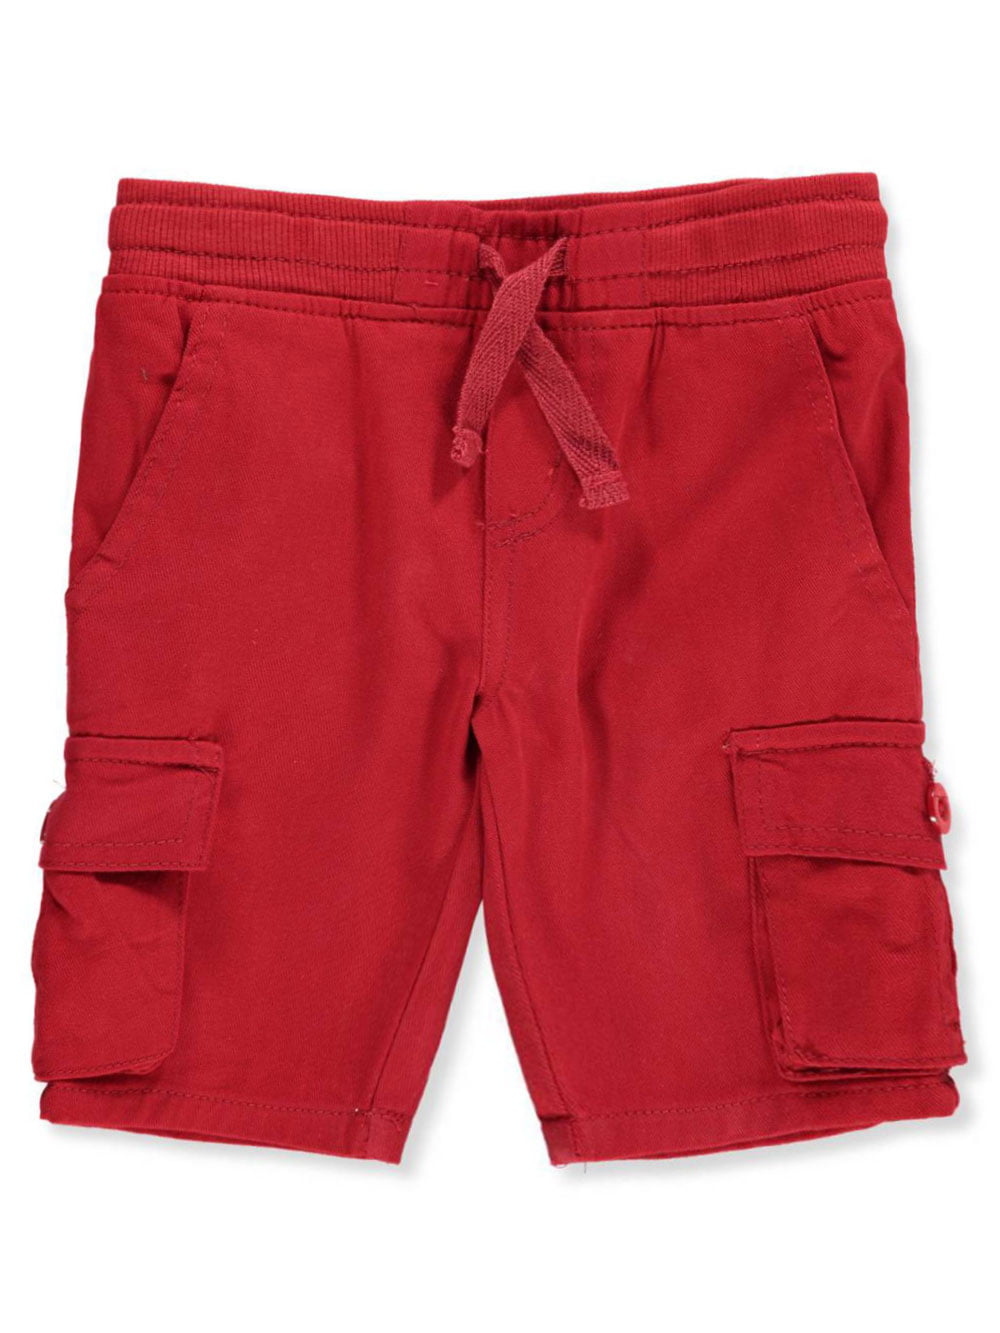 Quad Seven - Quad Seven Boys' Cargo Shorts (Toddler) - Walmart.com ...